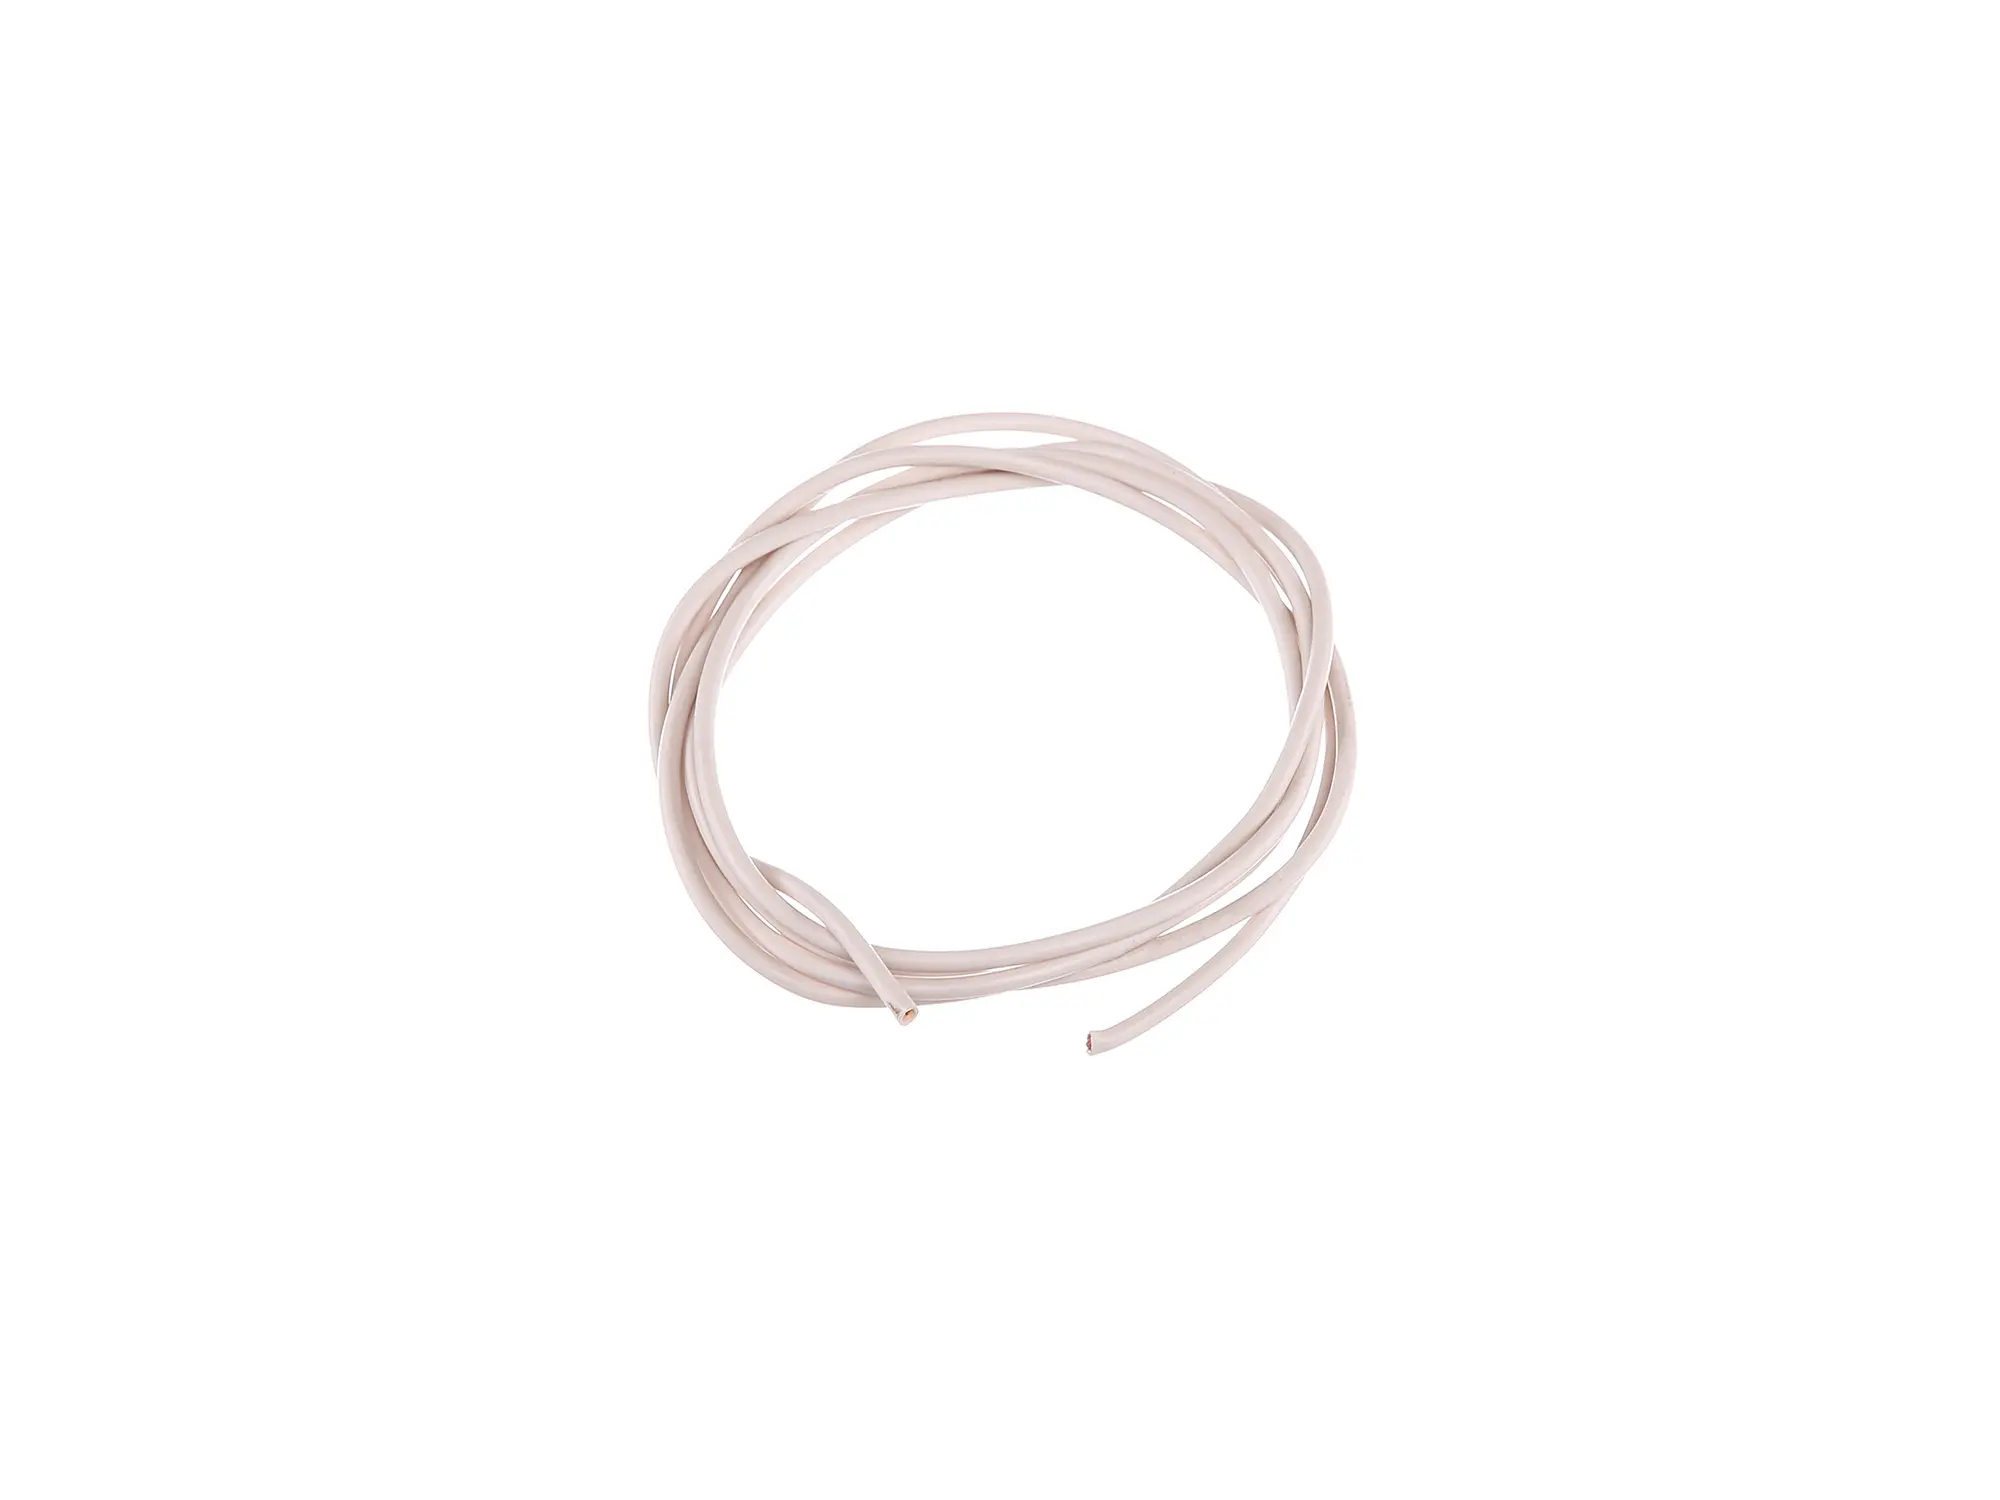 Kabel - Weiß 1,5mm² Fahrzeugleitung - 1m, Art.-Nr.: 10055126 - Bild 1